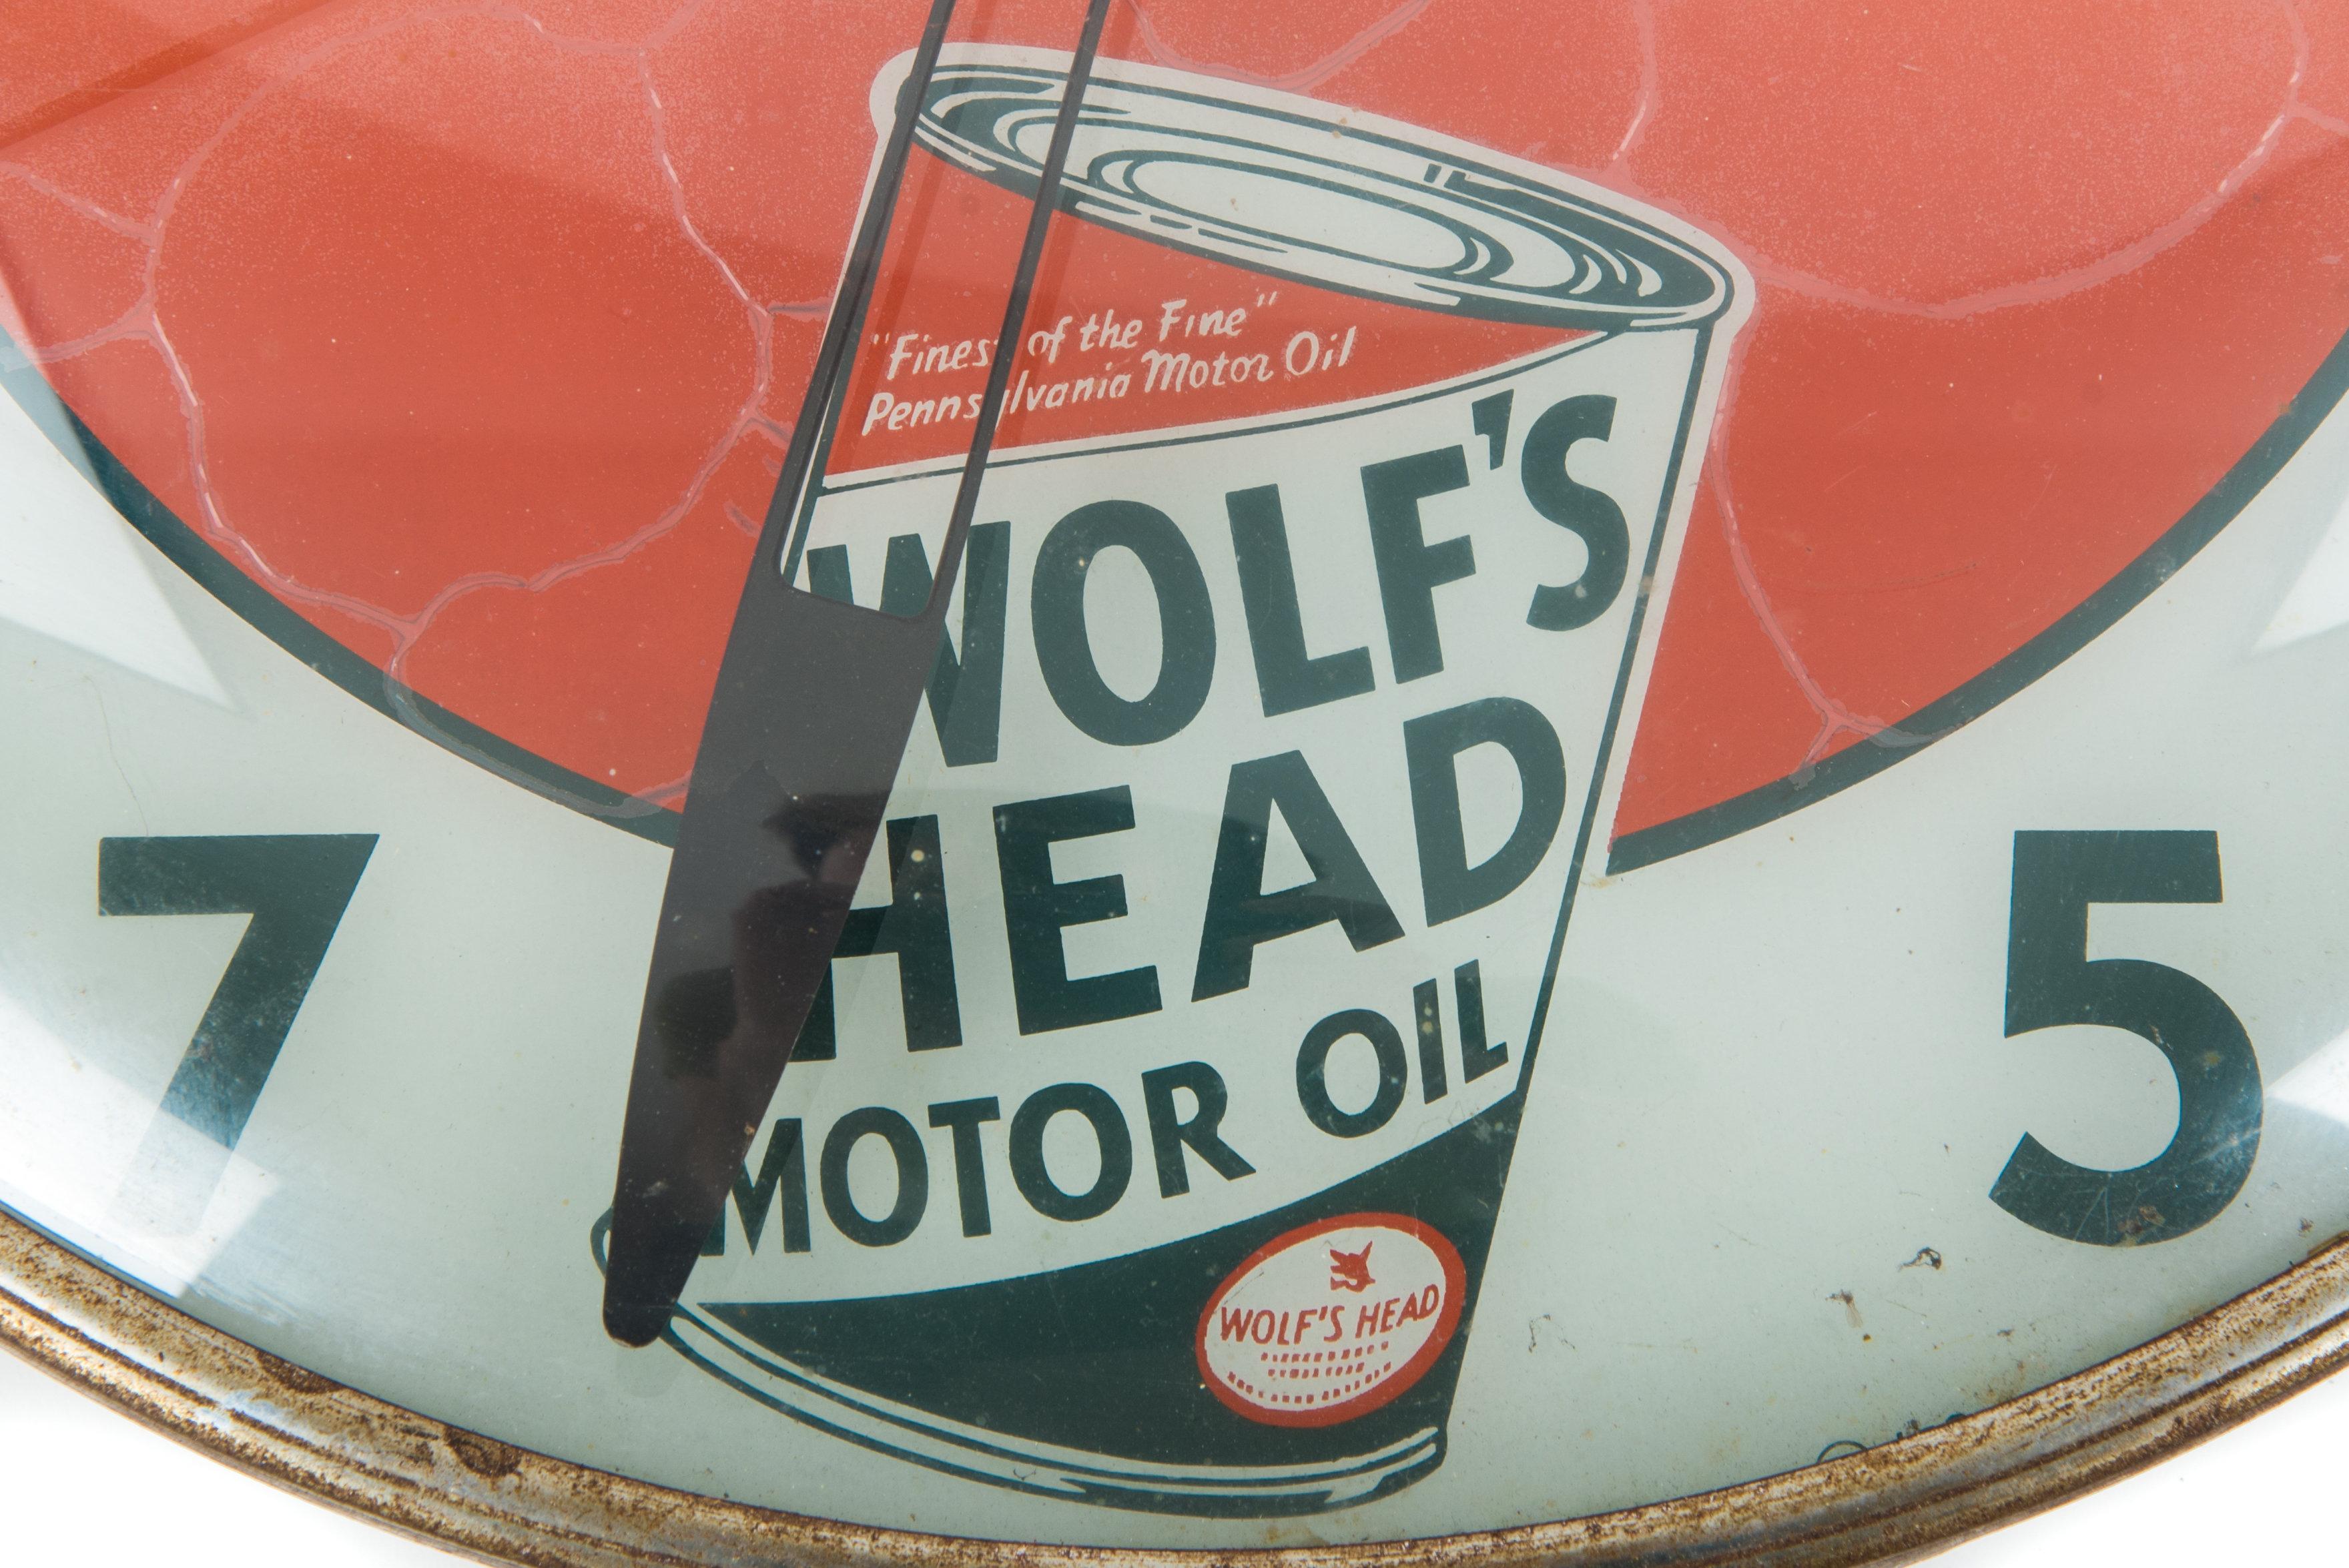 Wolf's Head Motor Oil Lighted Pam Clock